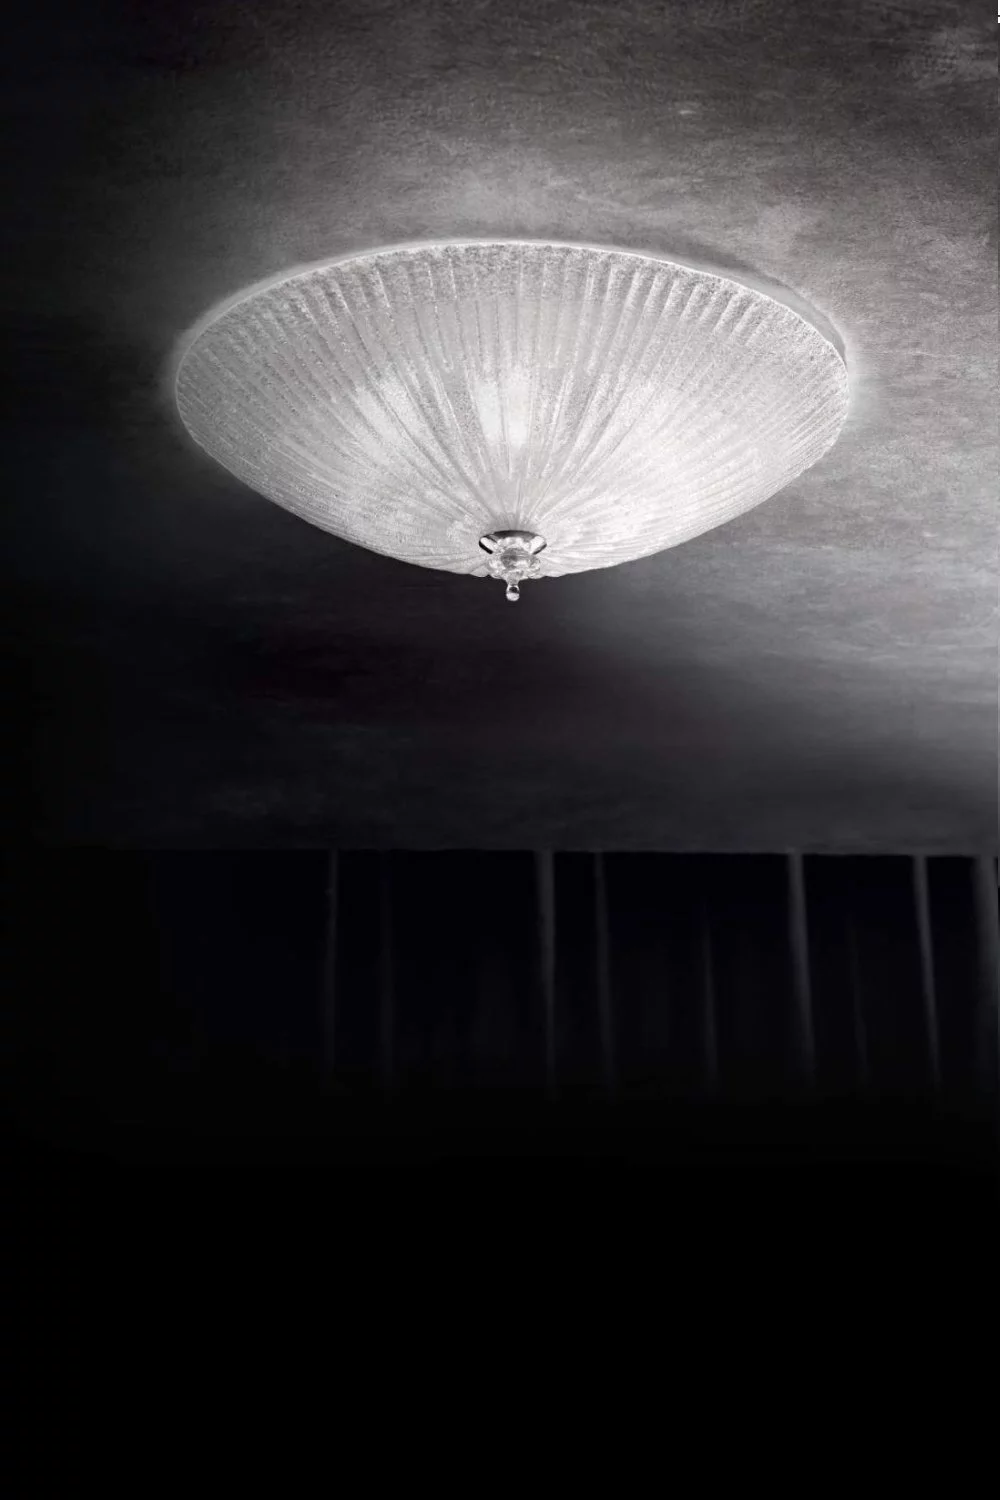   
                        
                        Люстра IDEAL LUX (Италия) 41857    
                         в стиле Модерн.  
                        Тип источника света: светодиодная лампа, сменная.                         Форма: Круг.                         Цвета плафонов и подвесок: Белый.                         Материал: Стекло.                          фото 2